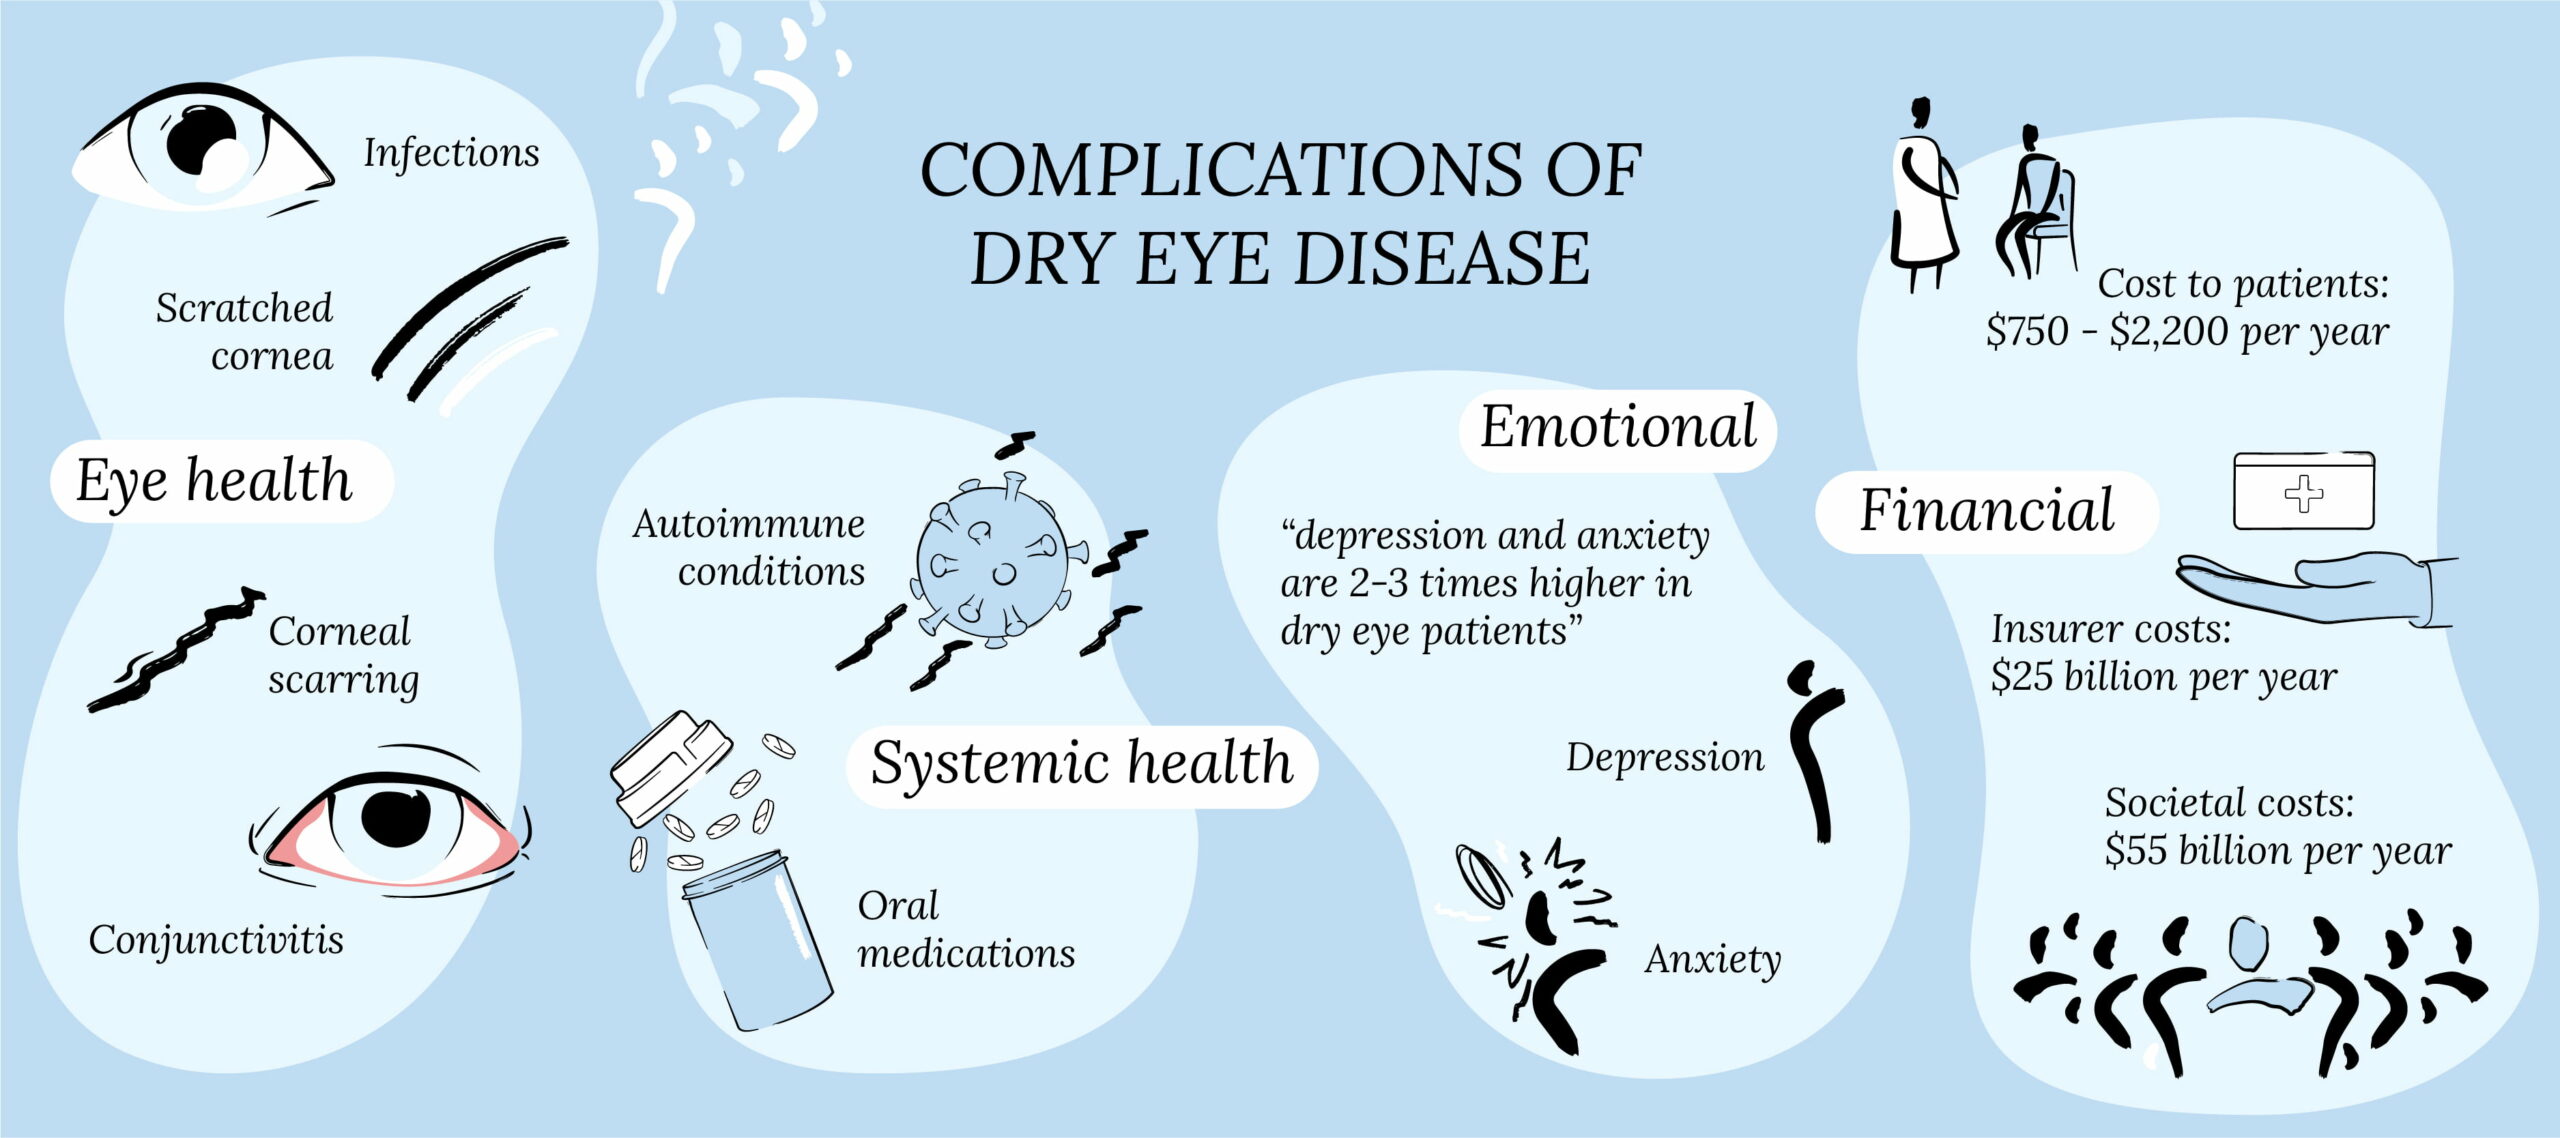 Complications of dry eye disease